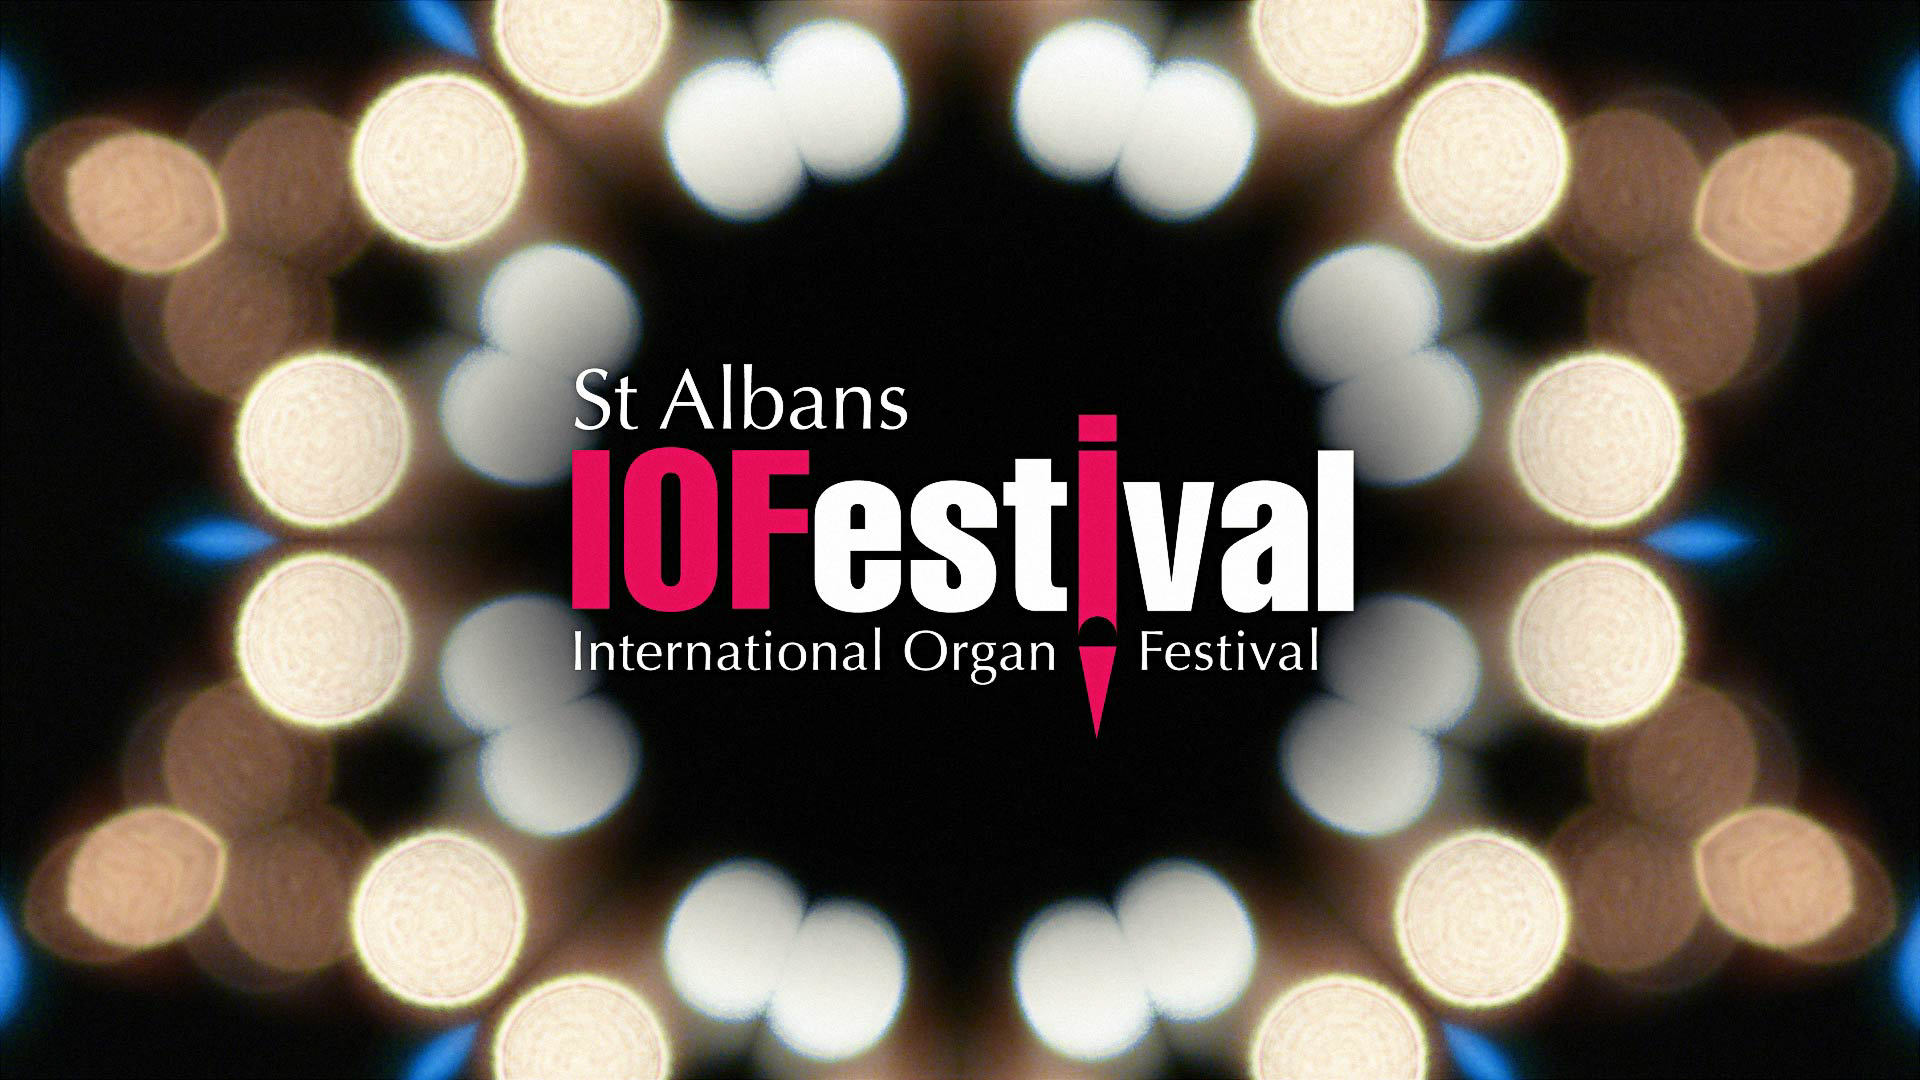 placeholding image of festival logo